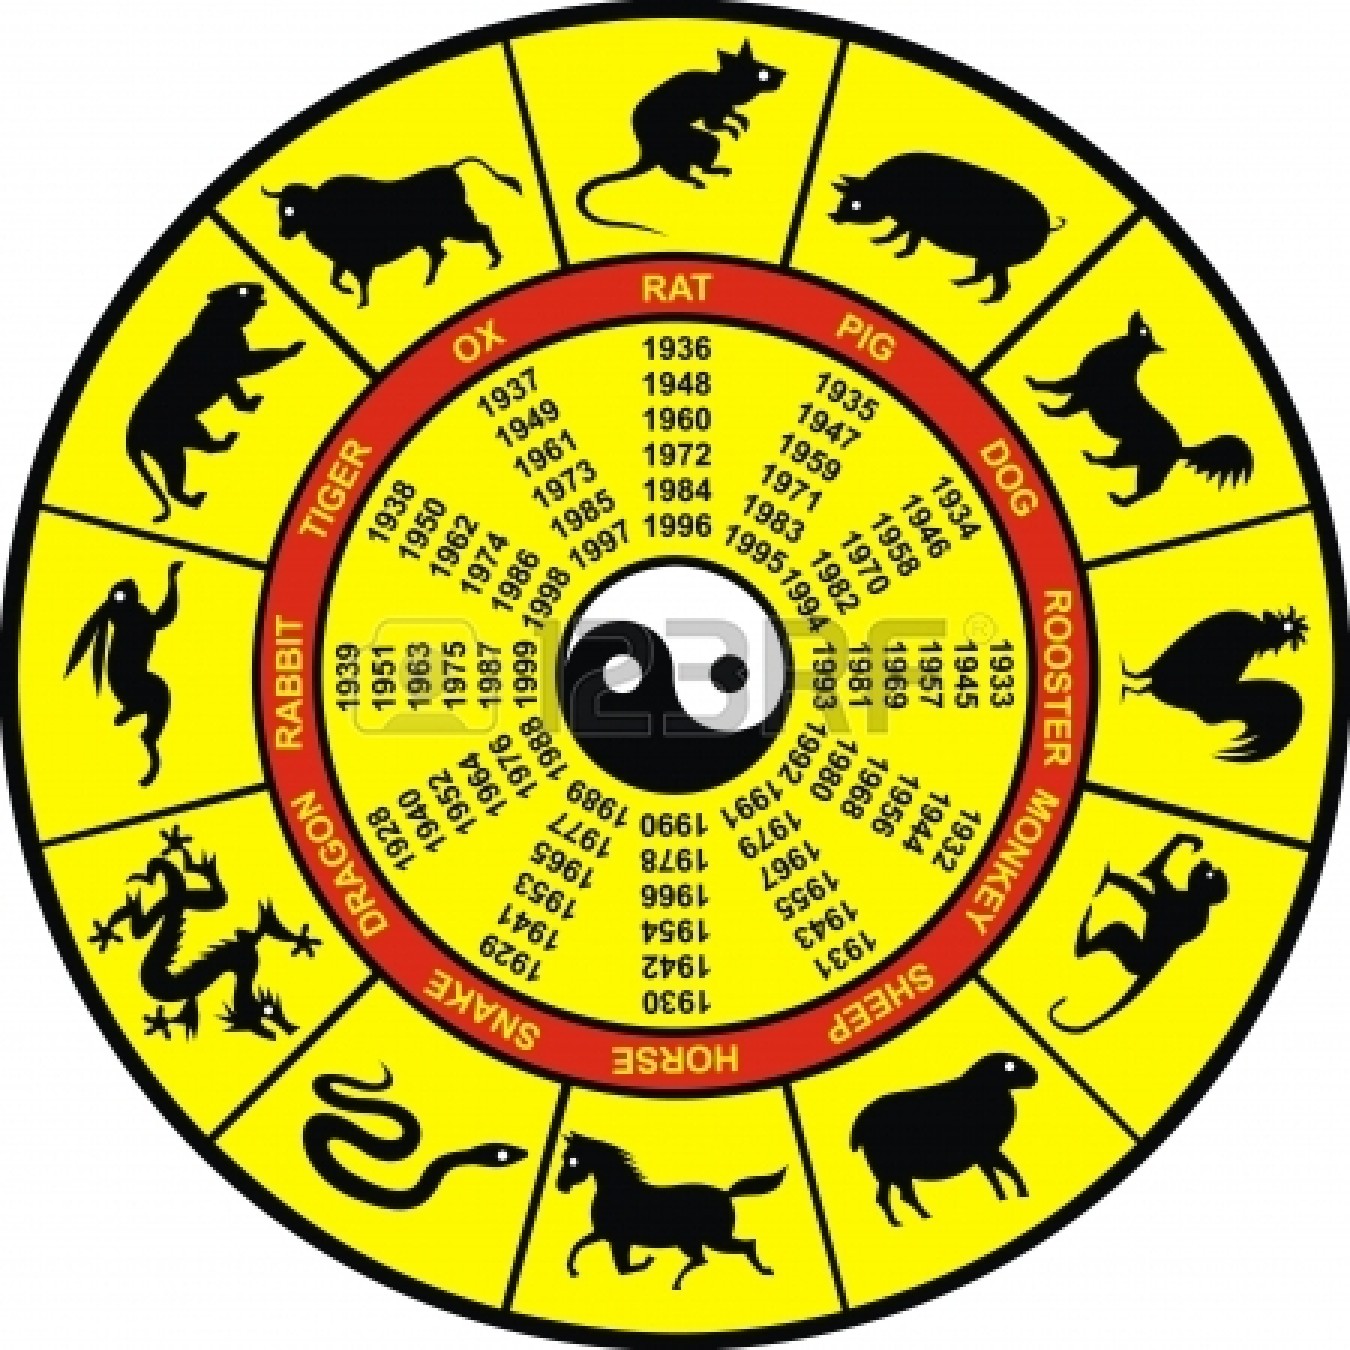 Cheinse zodiac animals horoscope wheel